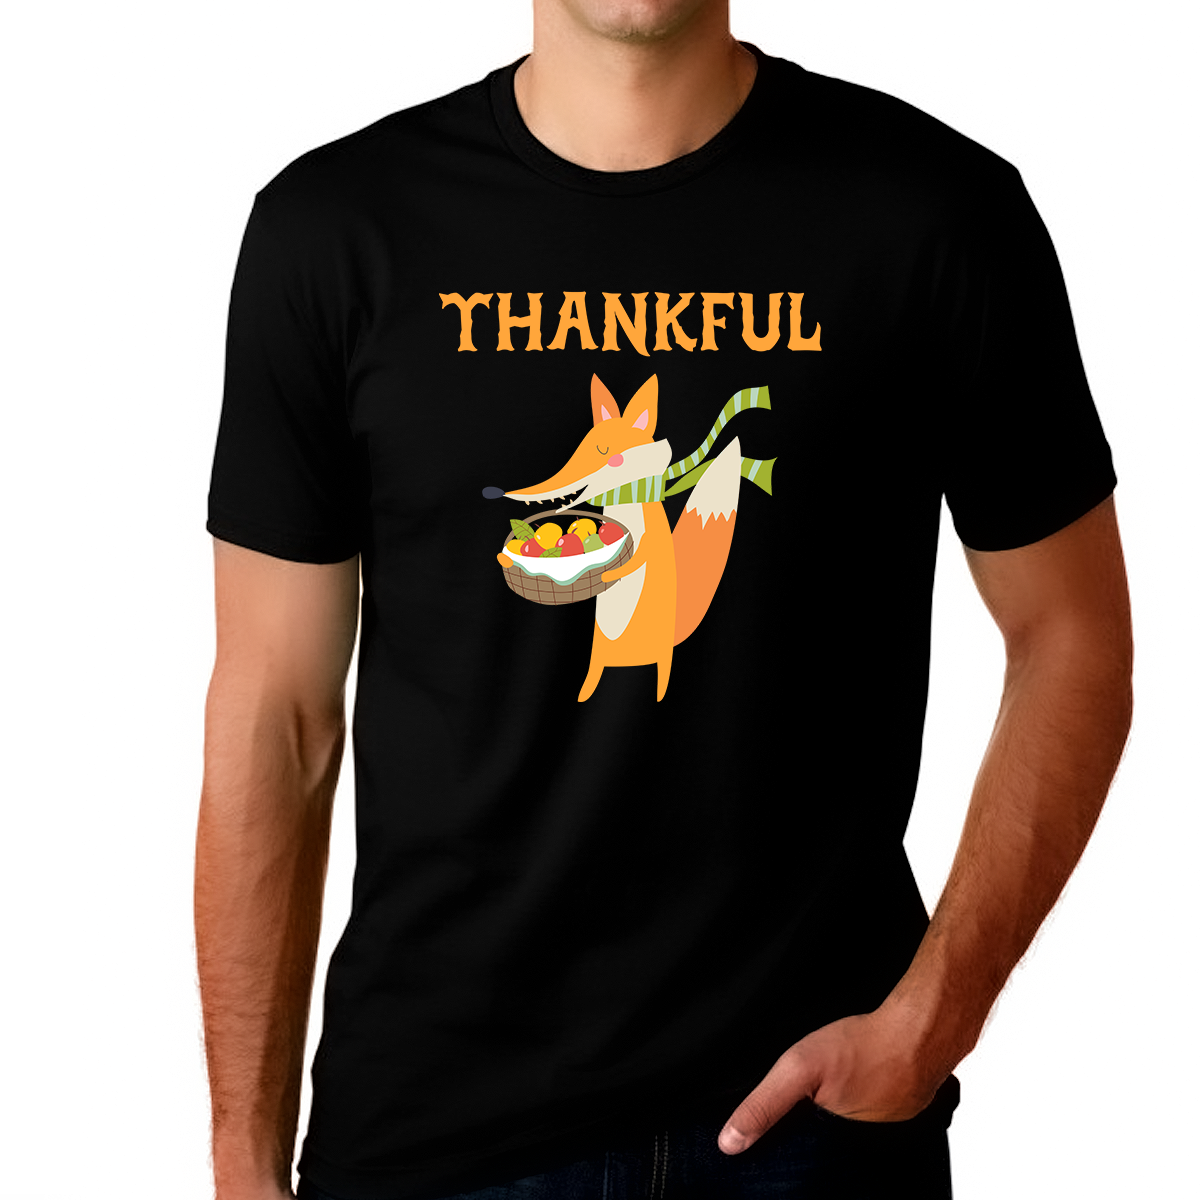 Mens Thanksgiving Shirt Cool Fox Shirt Fall Shirt Thankful Shirts for Men Funny Thanksgiving Shirts